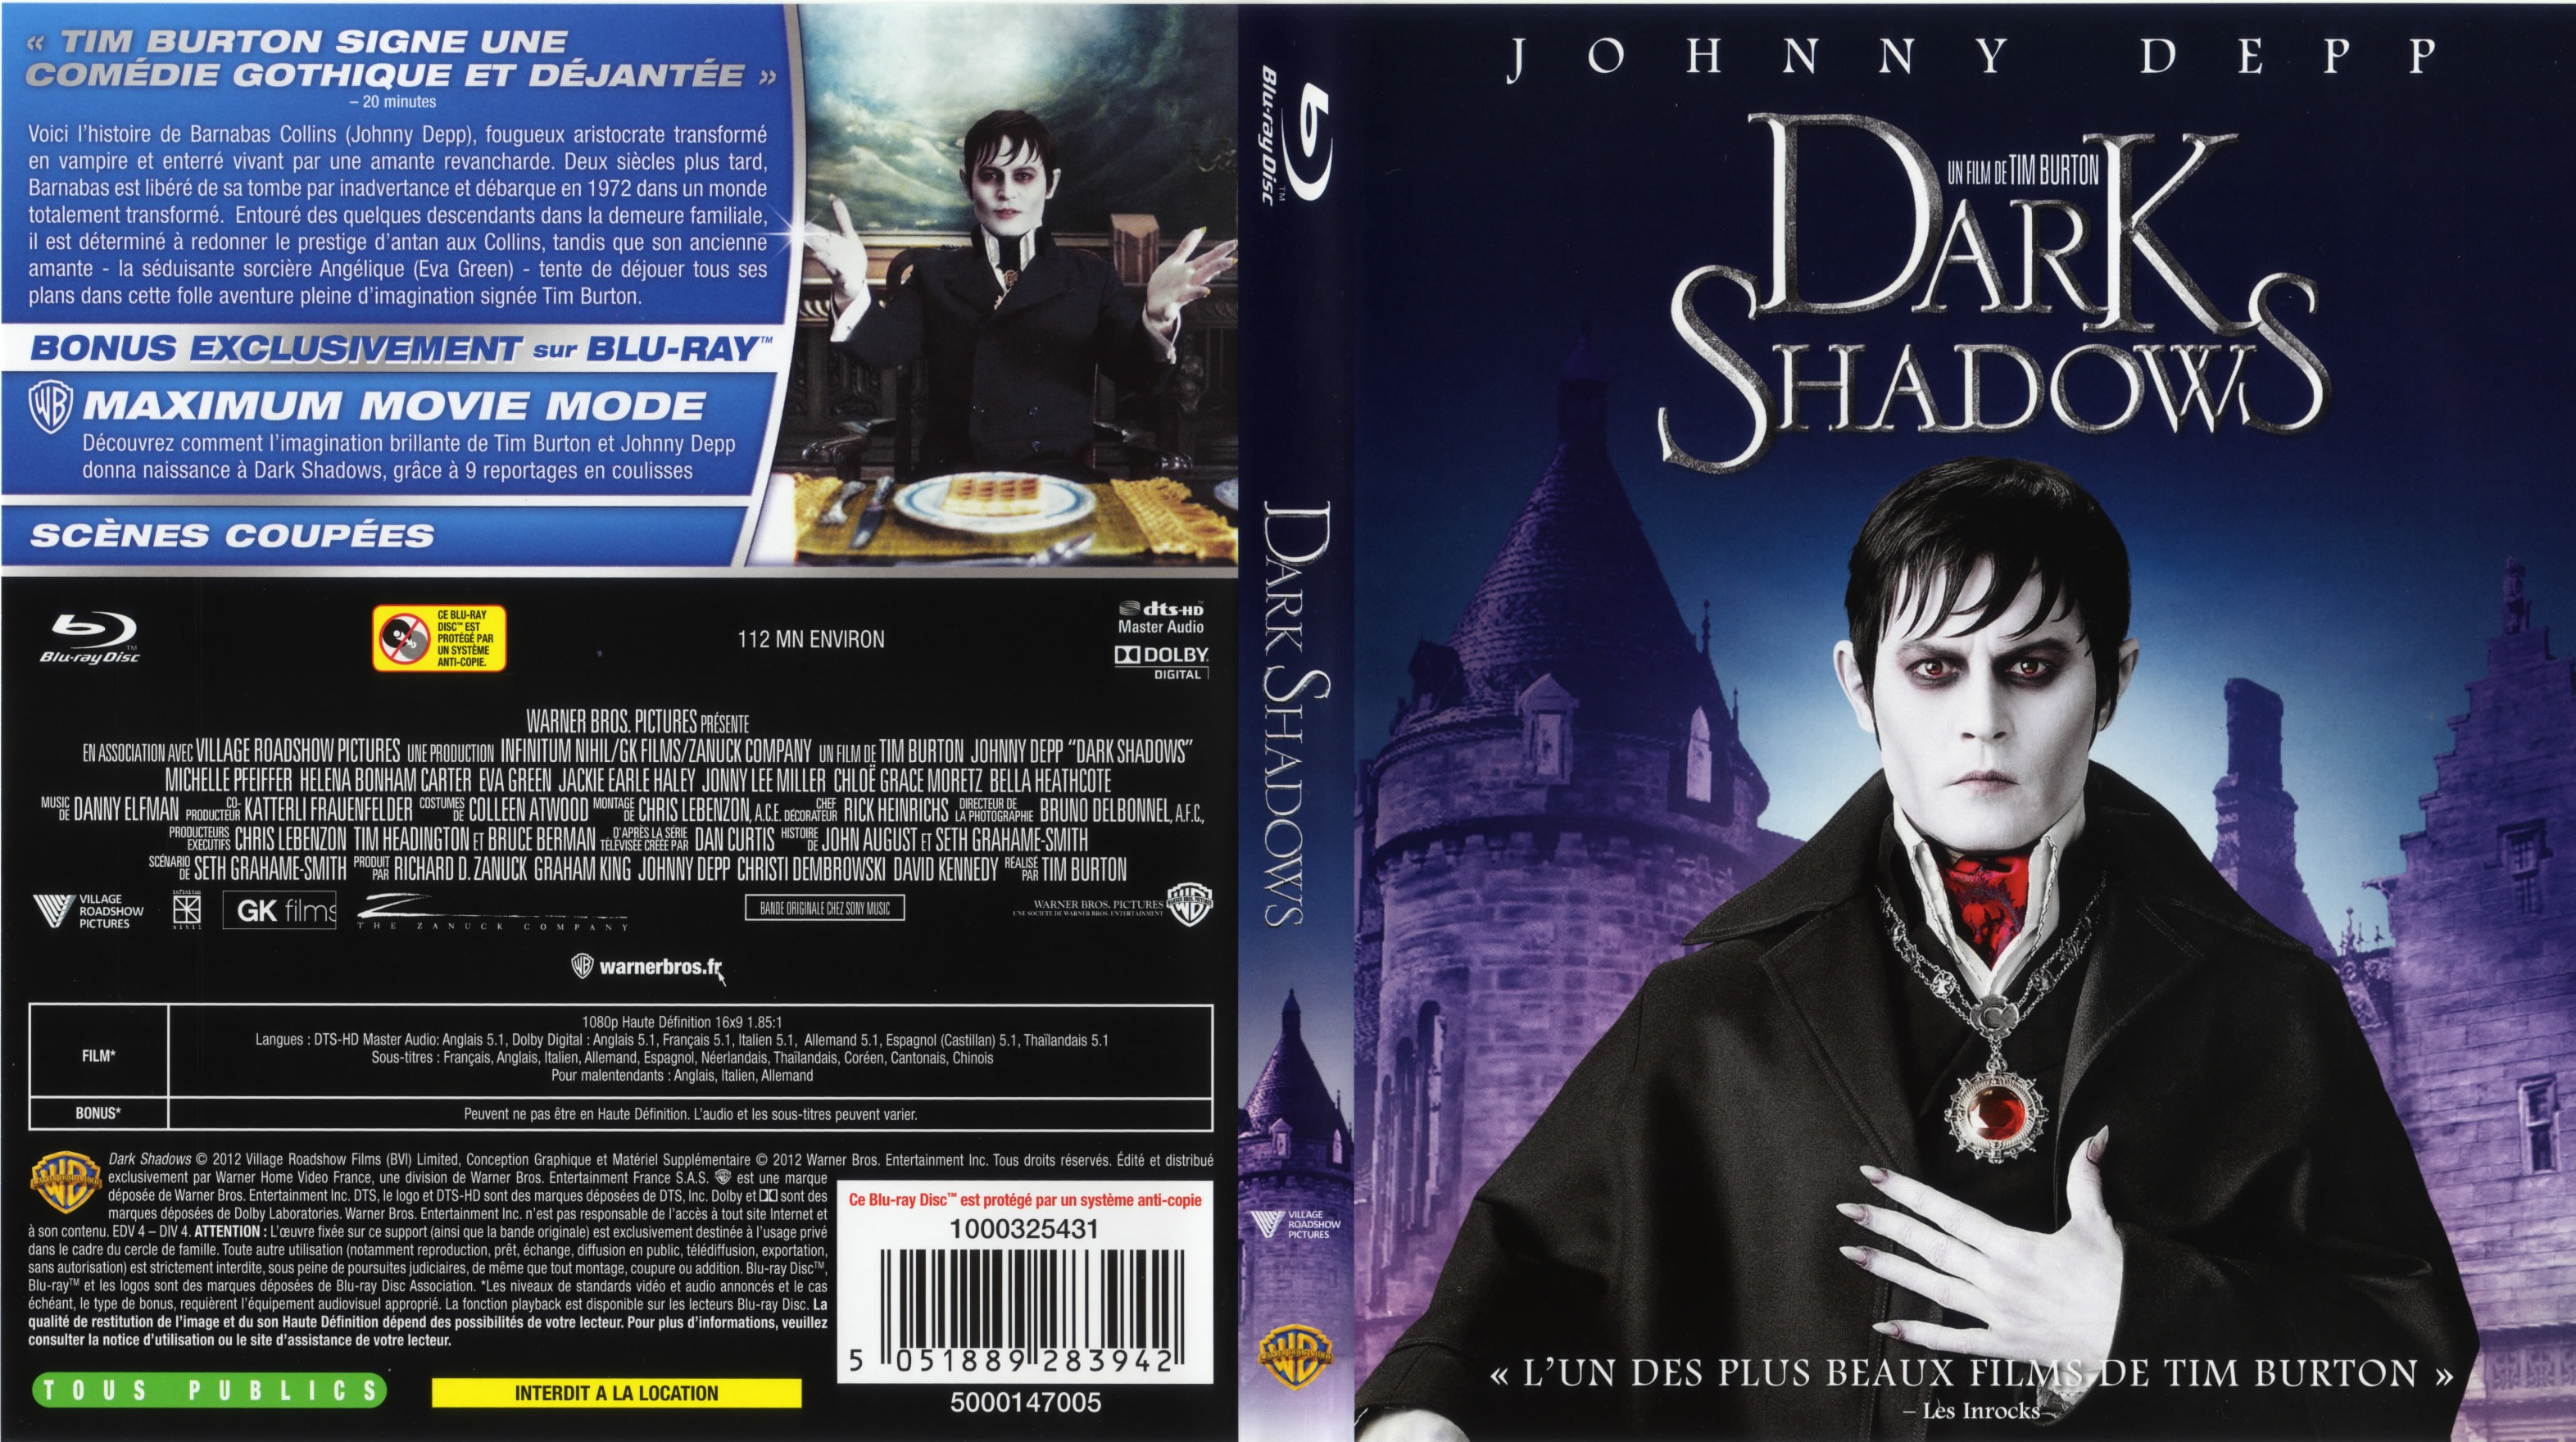 Jaquette DVD Dark shadows (BLU-RAY) v2